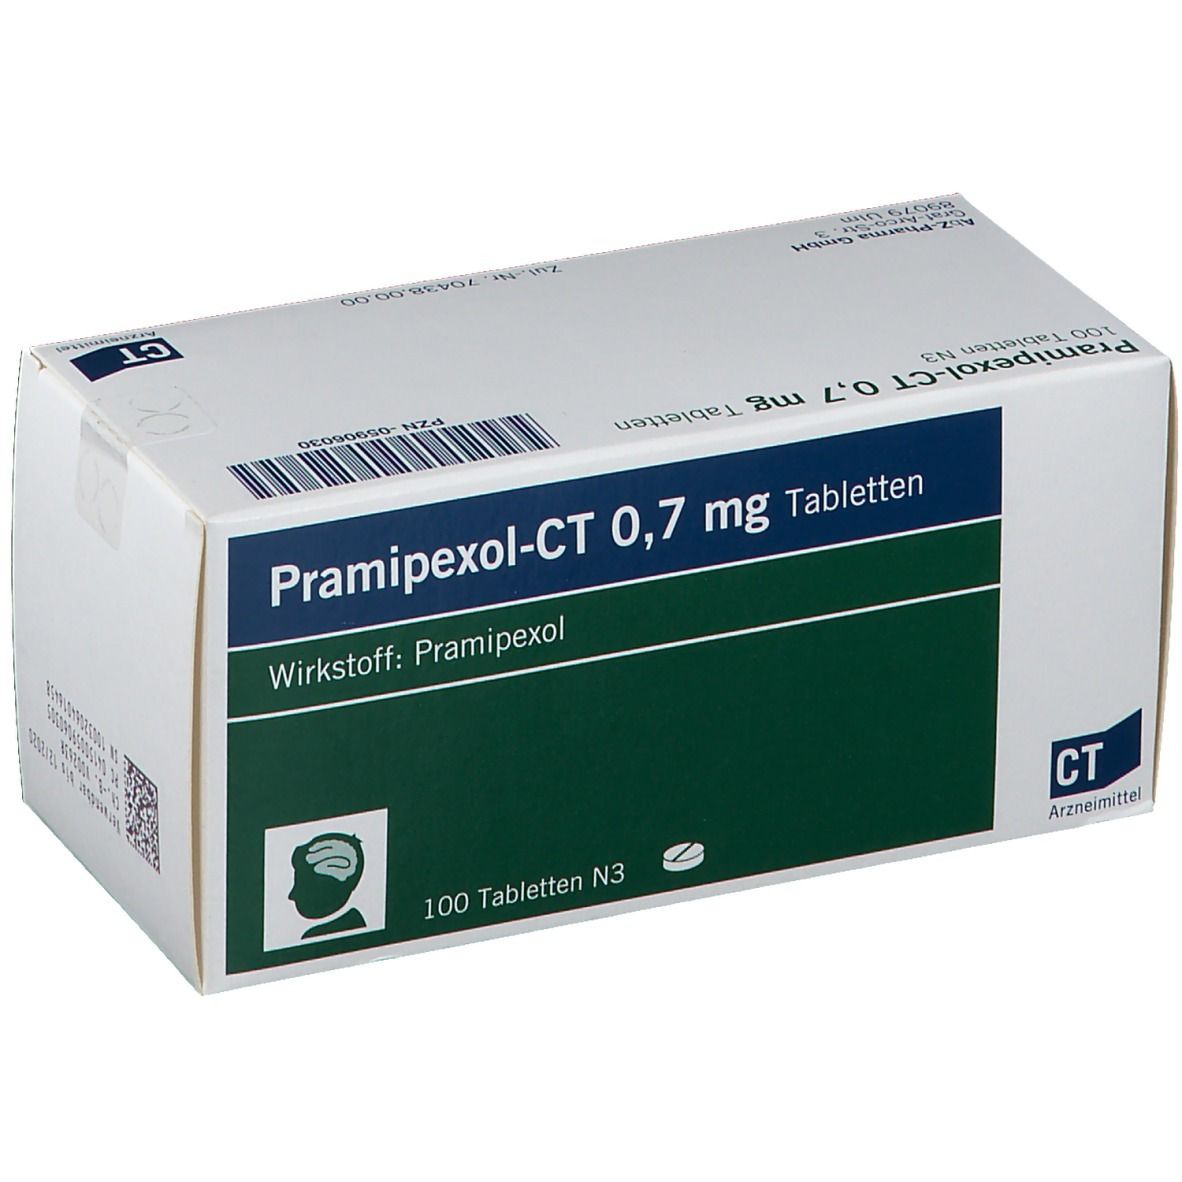 Pramipexol-CT 0,7 mg